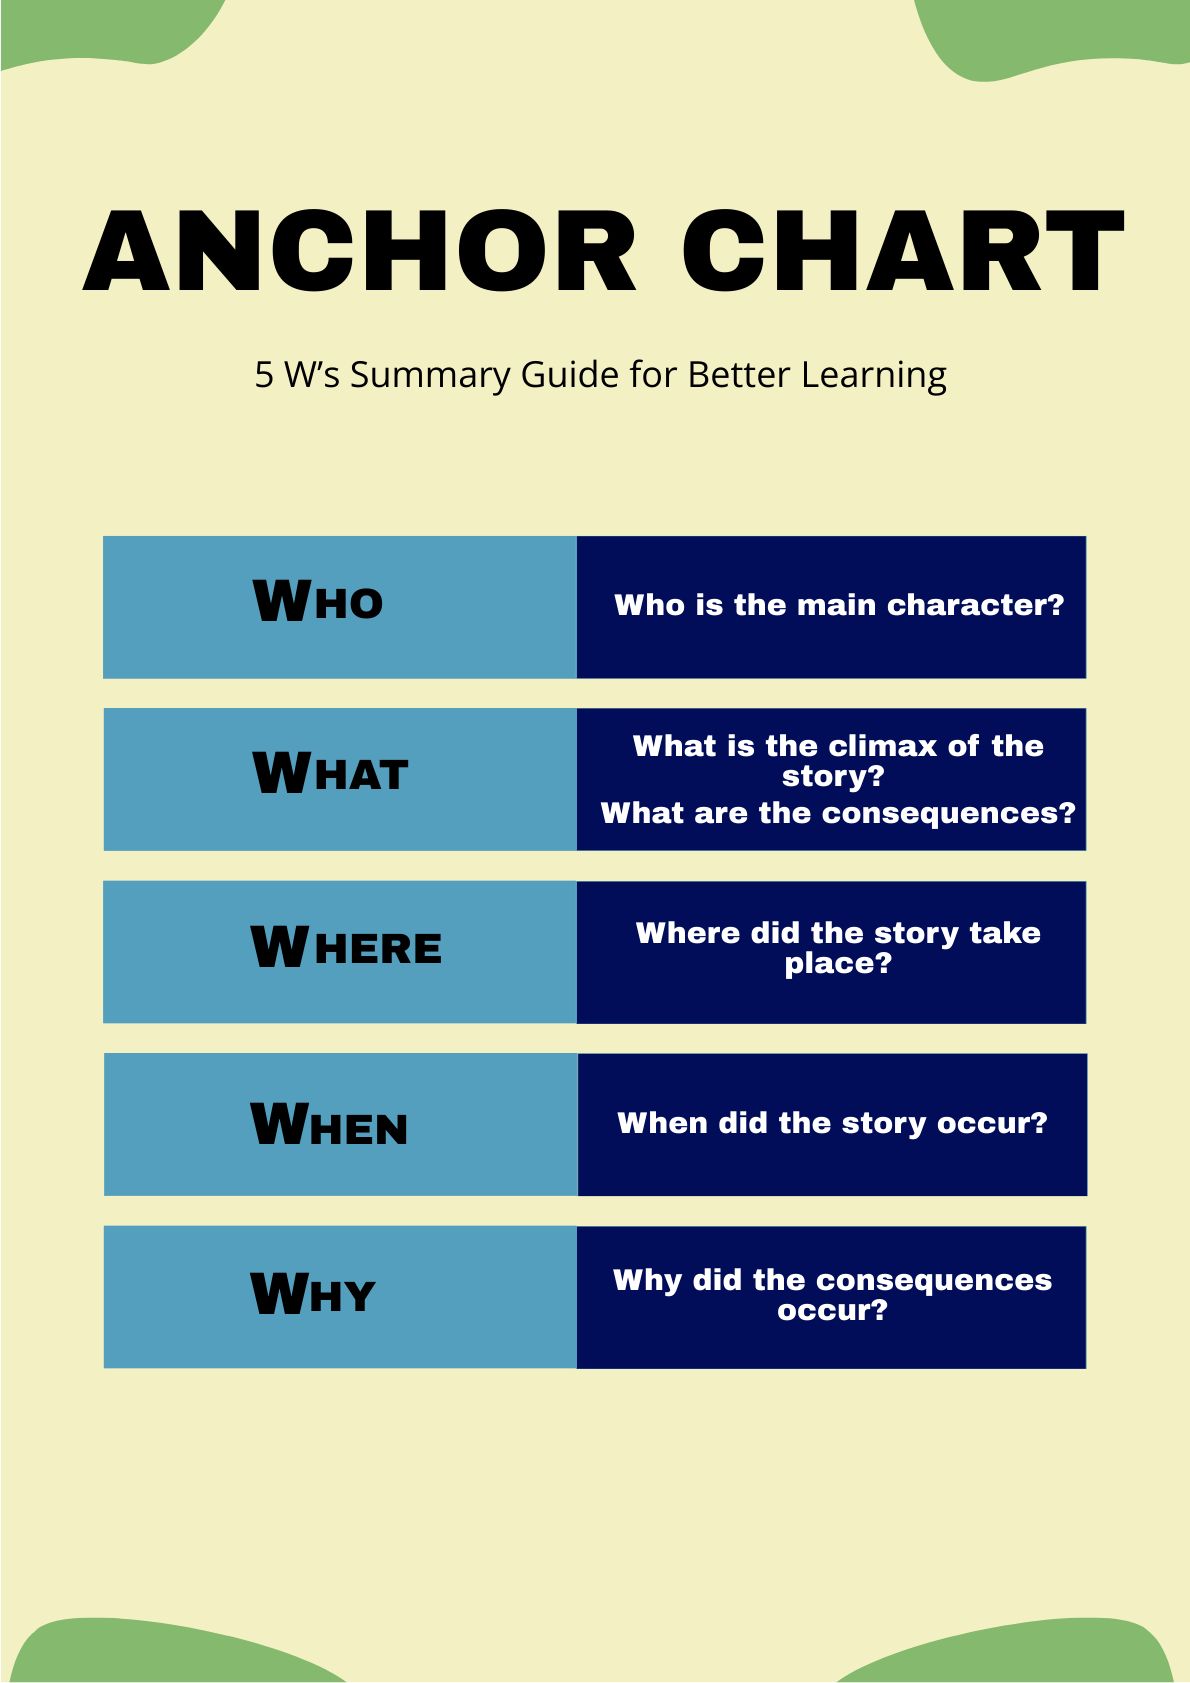 Anchor chart